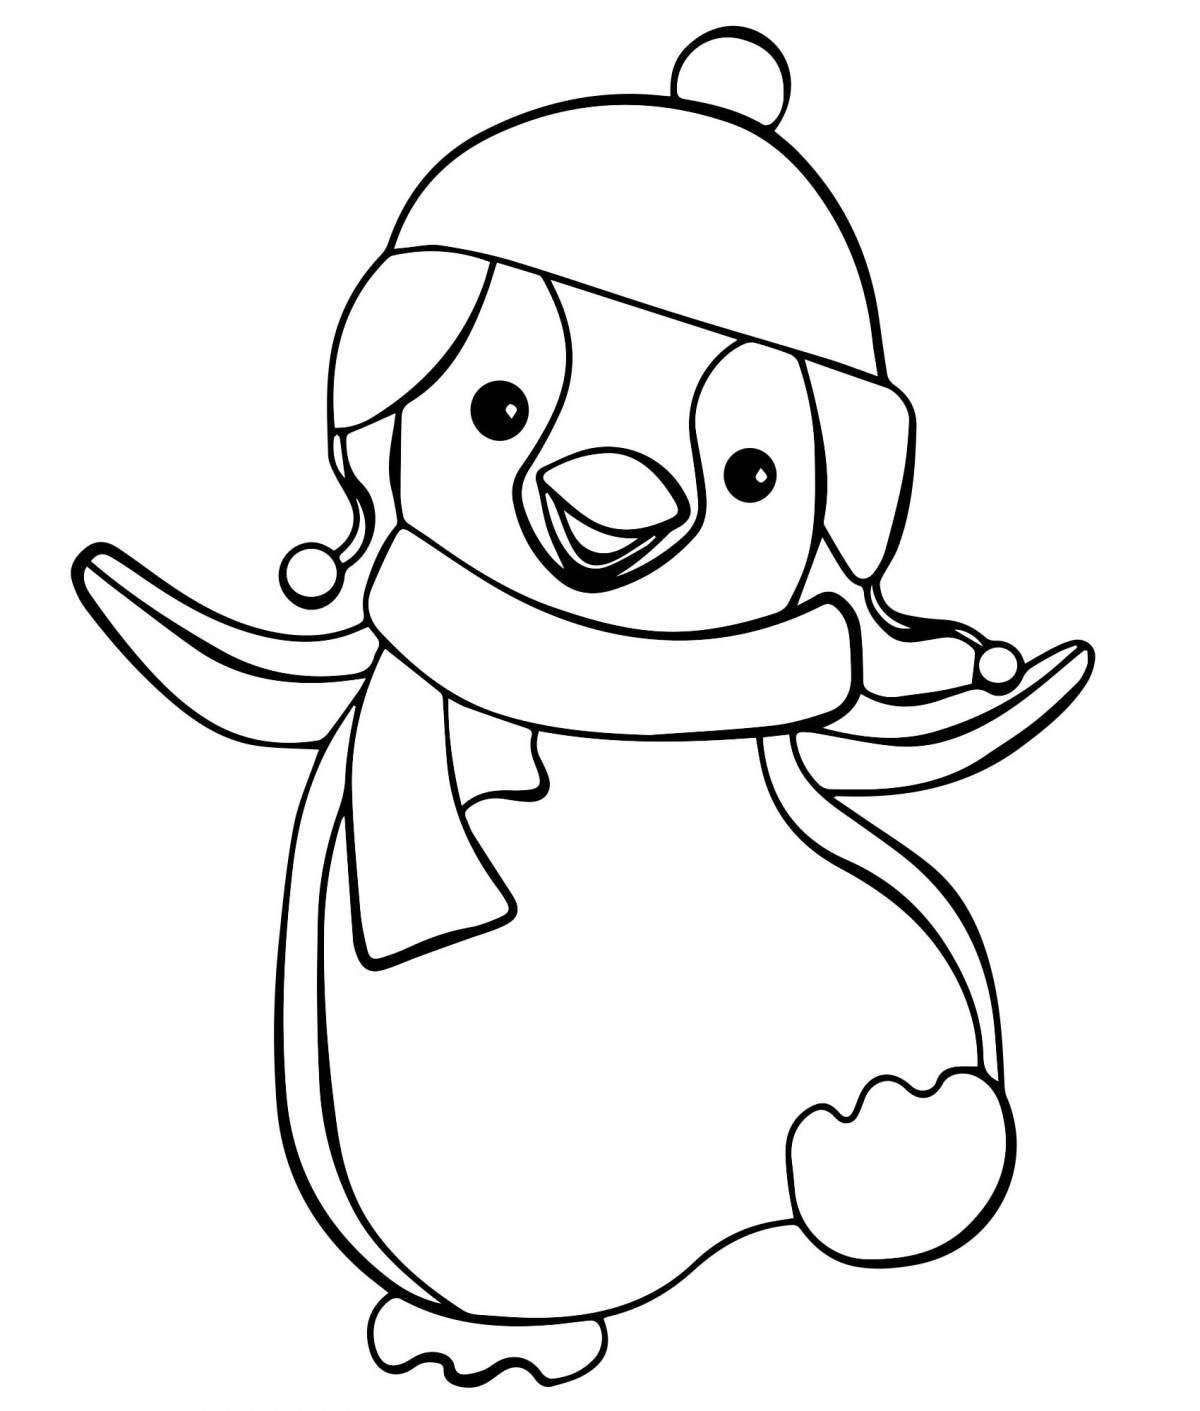 Penguin drawing for kids #6